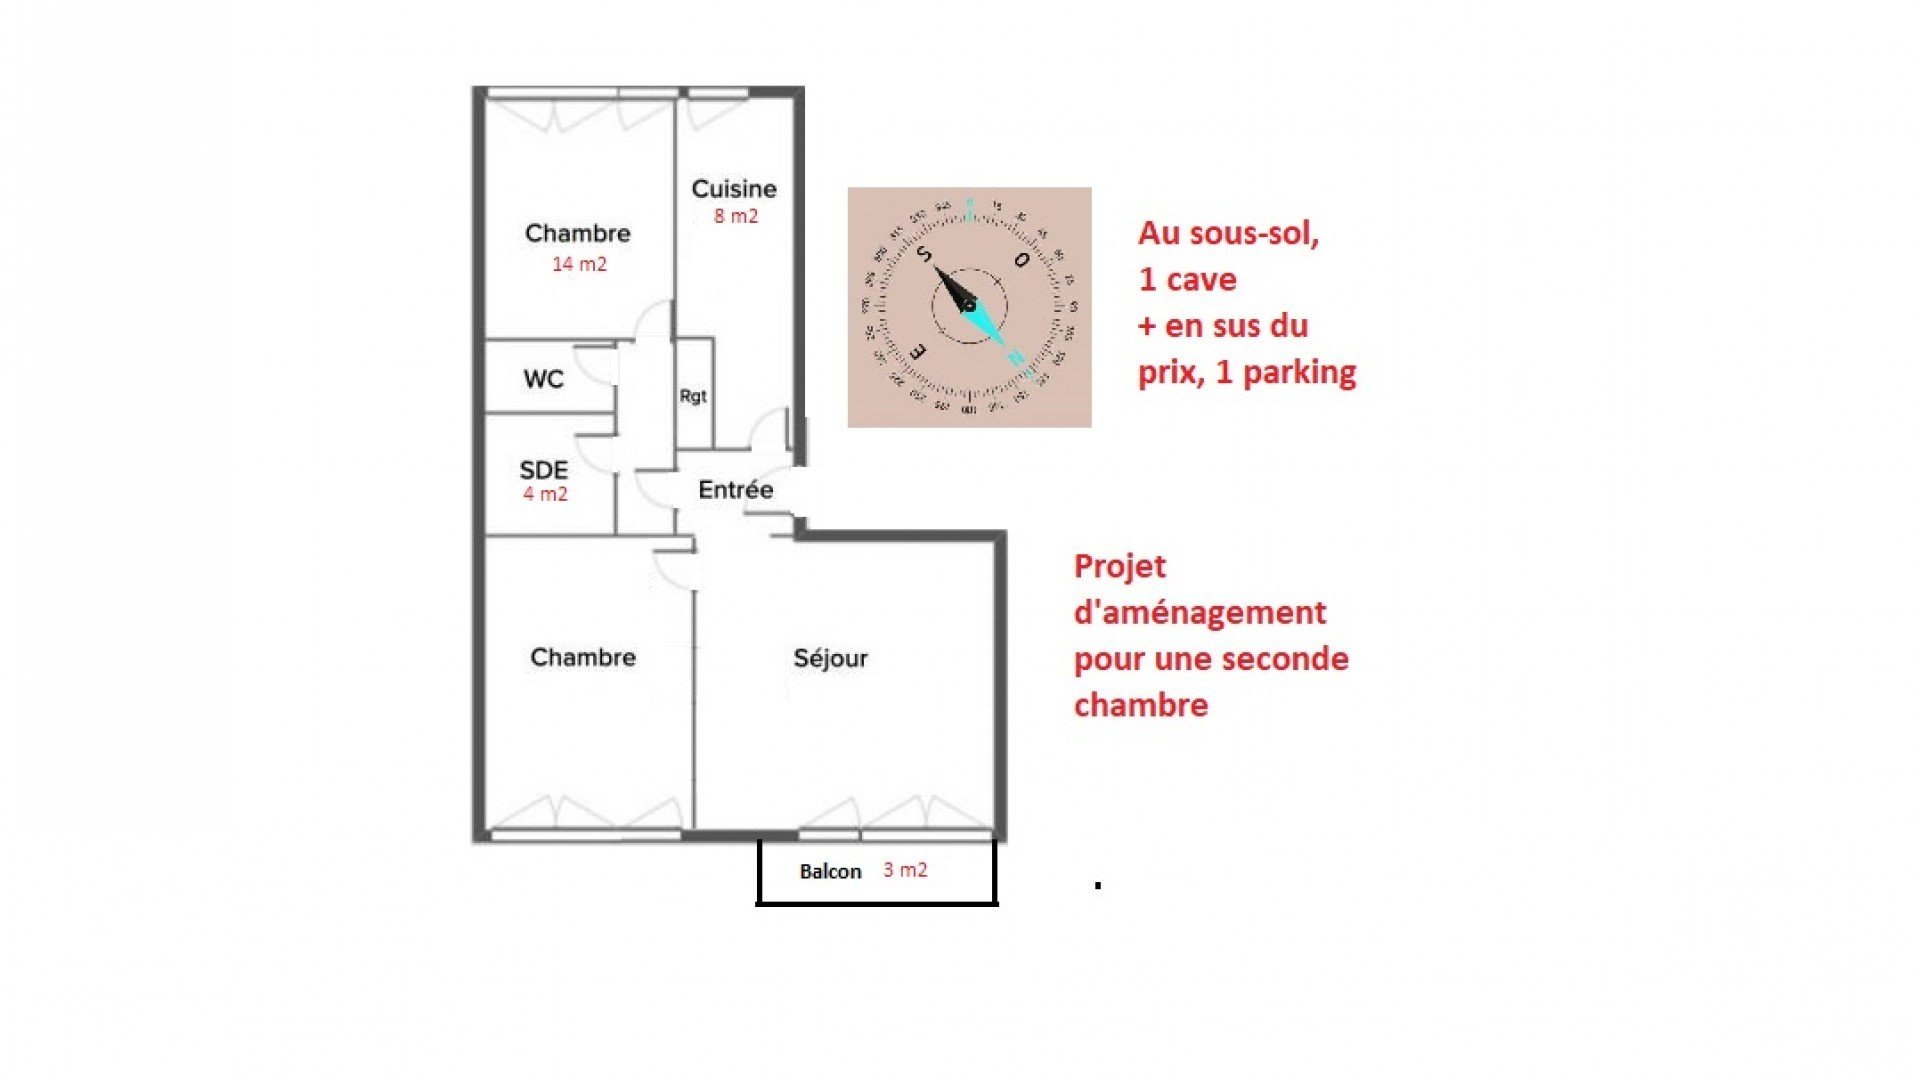 Appartement a louer neuilly-sur-seine - 3 pièce(s) - 74 m2 - Surfyn